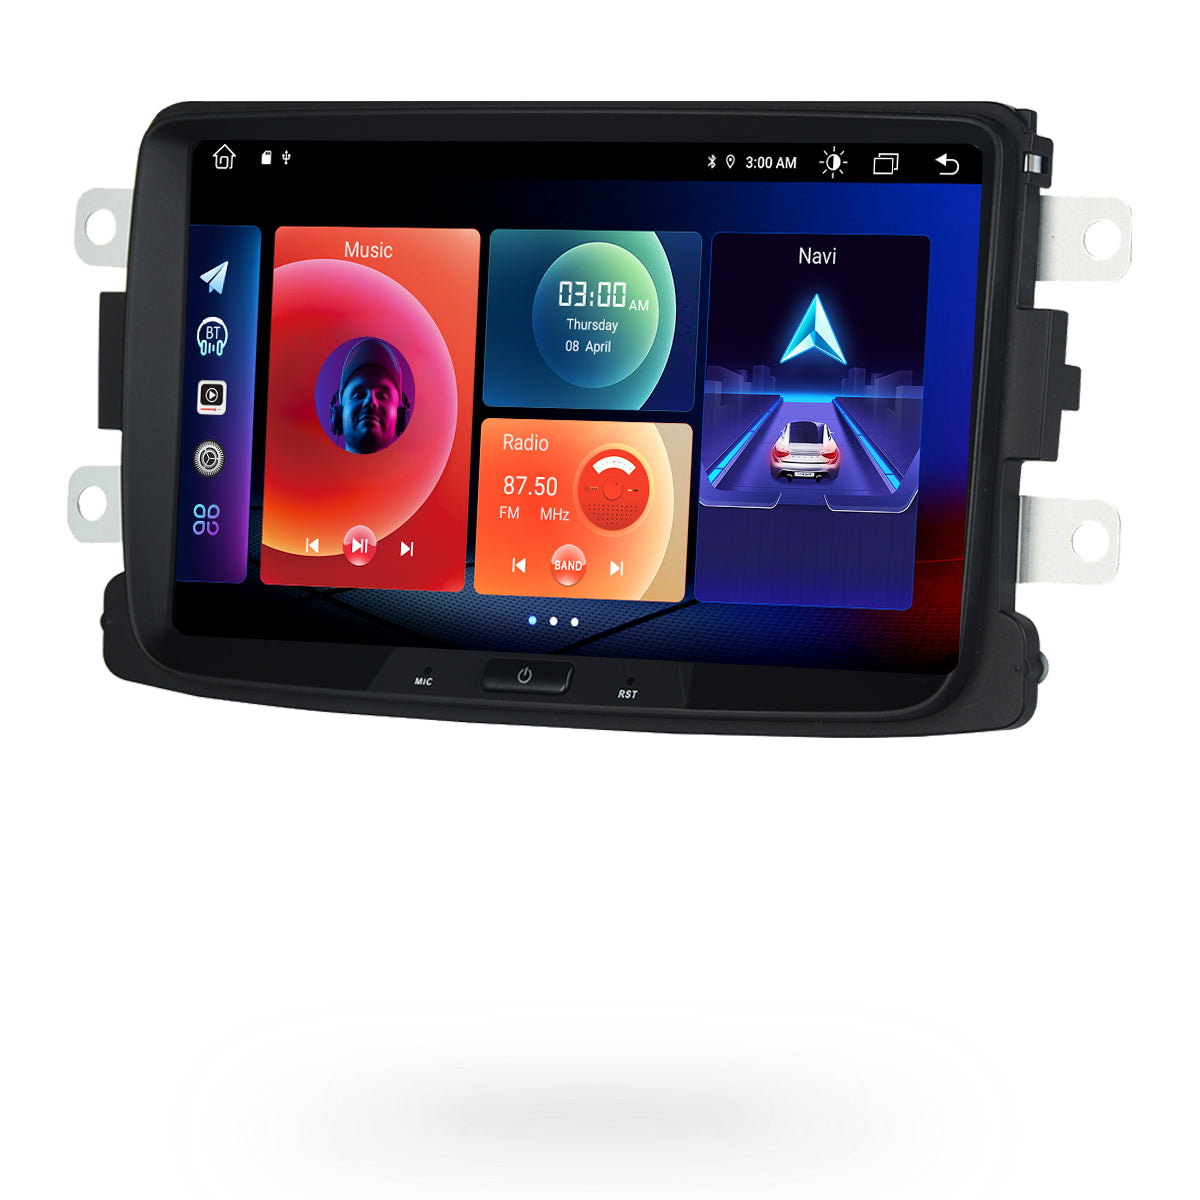 Roadanvi F10 8 "Android 10.0 Car Radio with Screen for Renault Duster Dacia Sandero Duster Captur Lada Xray 2 Logan 2 Auto Stereo Bluetooth Compatible with Android Auto Apple CarPlay 1280*720 Head Unit